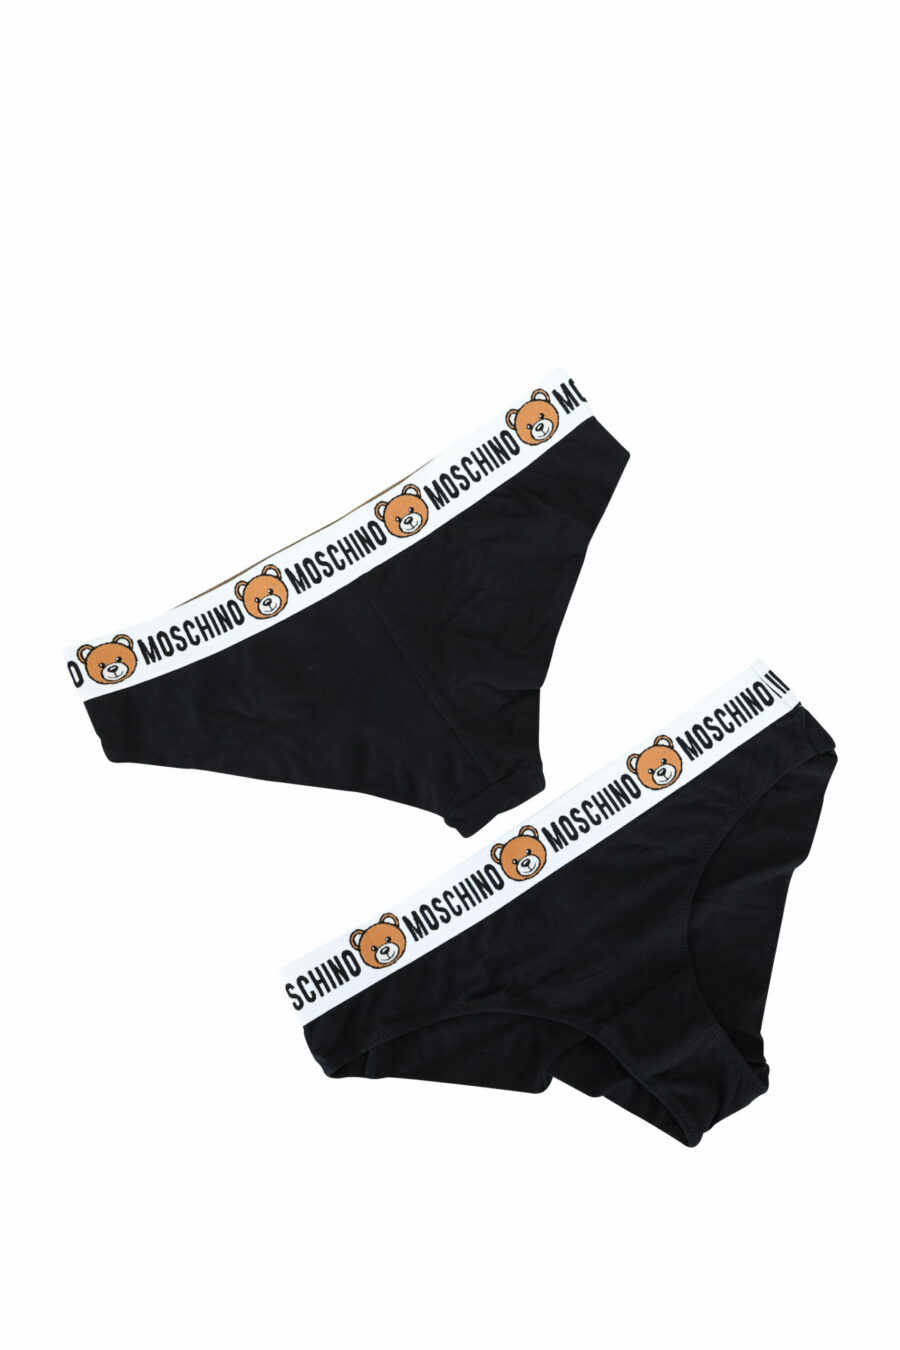 Black panties with underbear logo - 667113043968 1 scaled